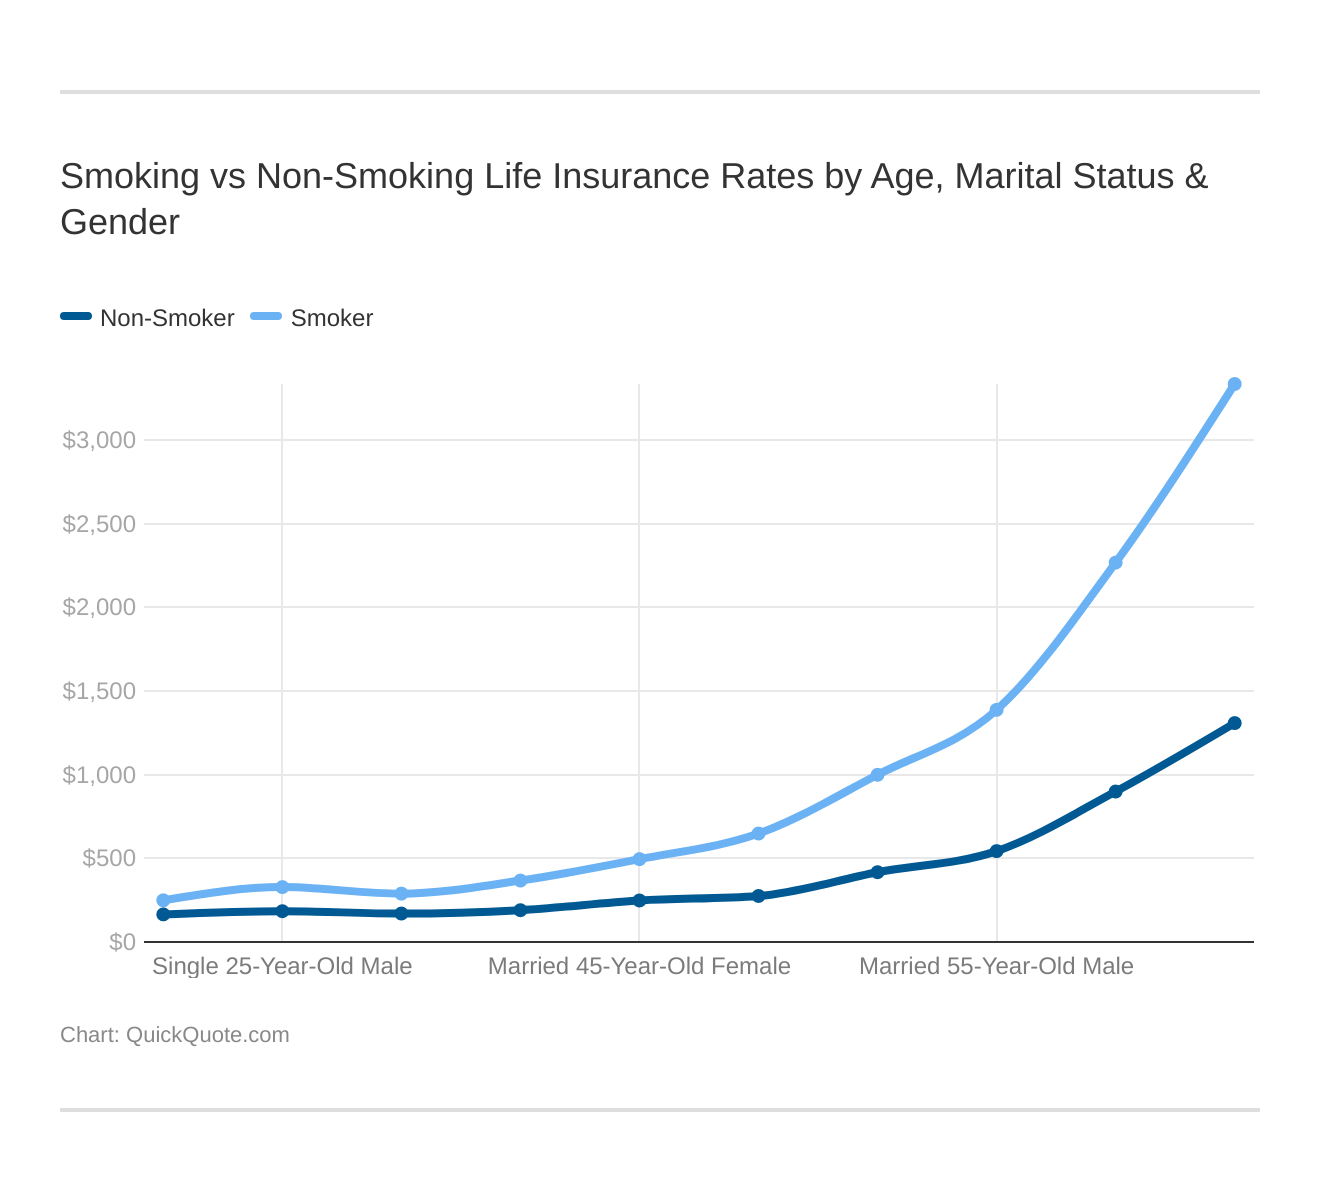 Smoking vs Non-Smoking Life Insurance Rates by Age, Marital Status & Gender